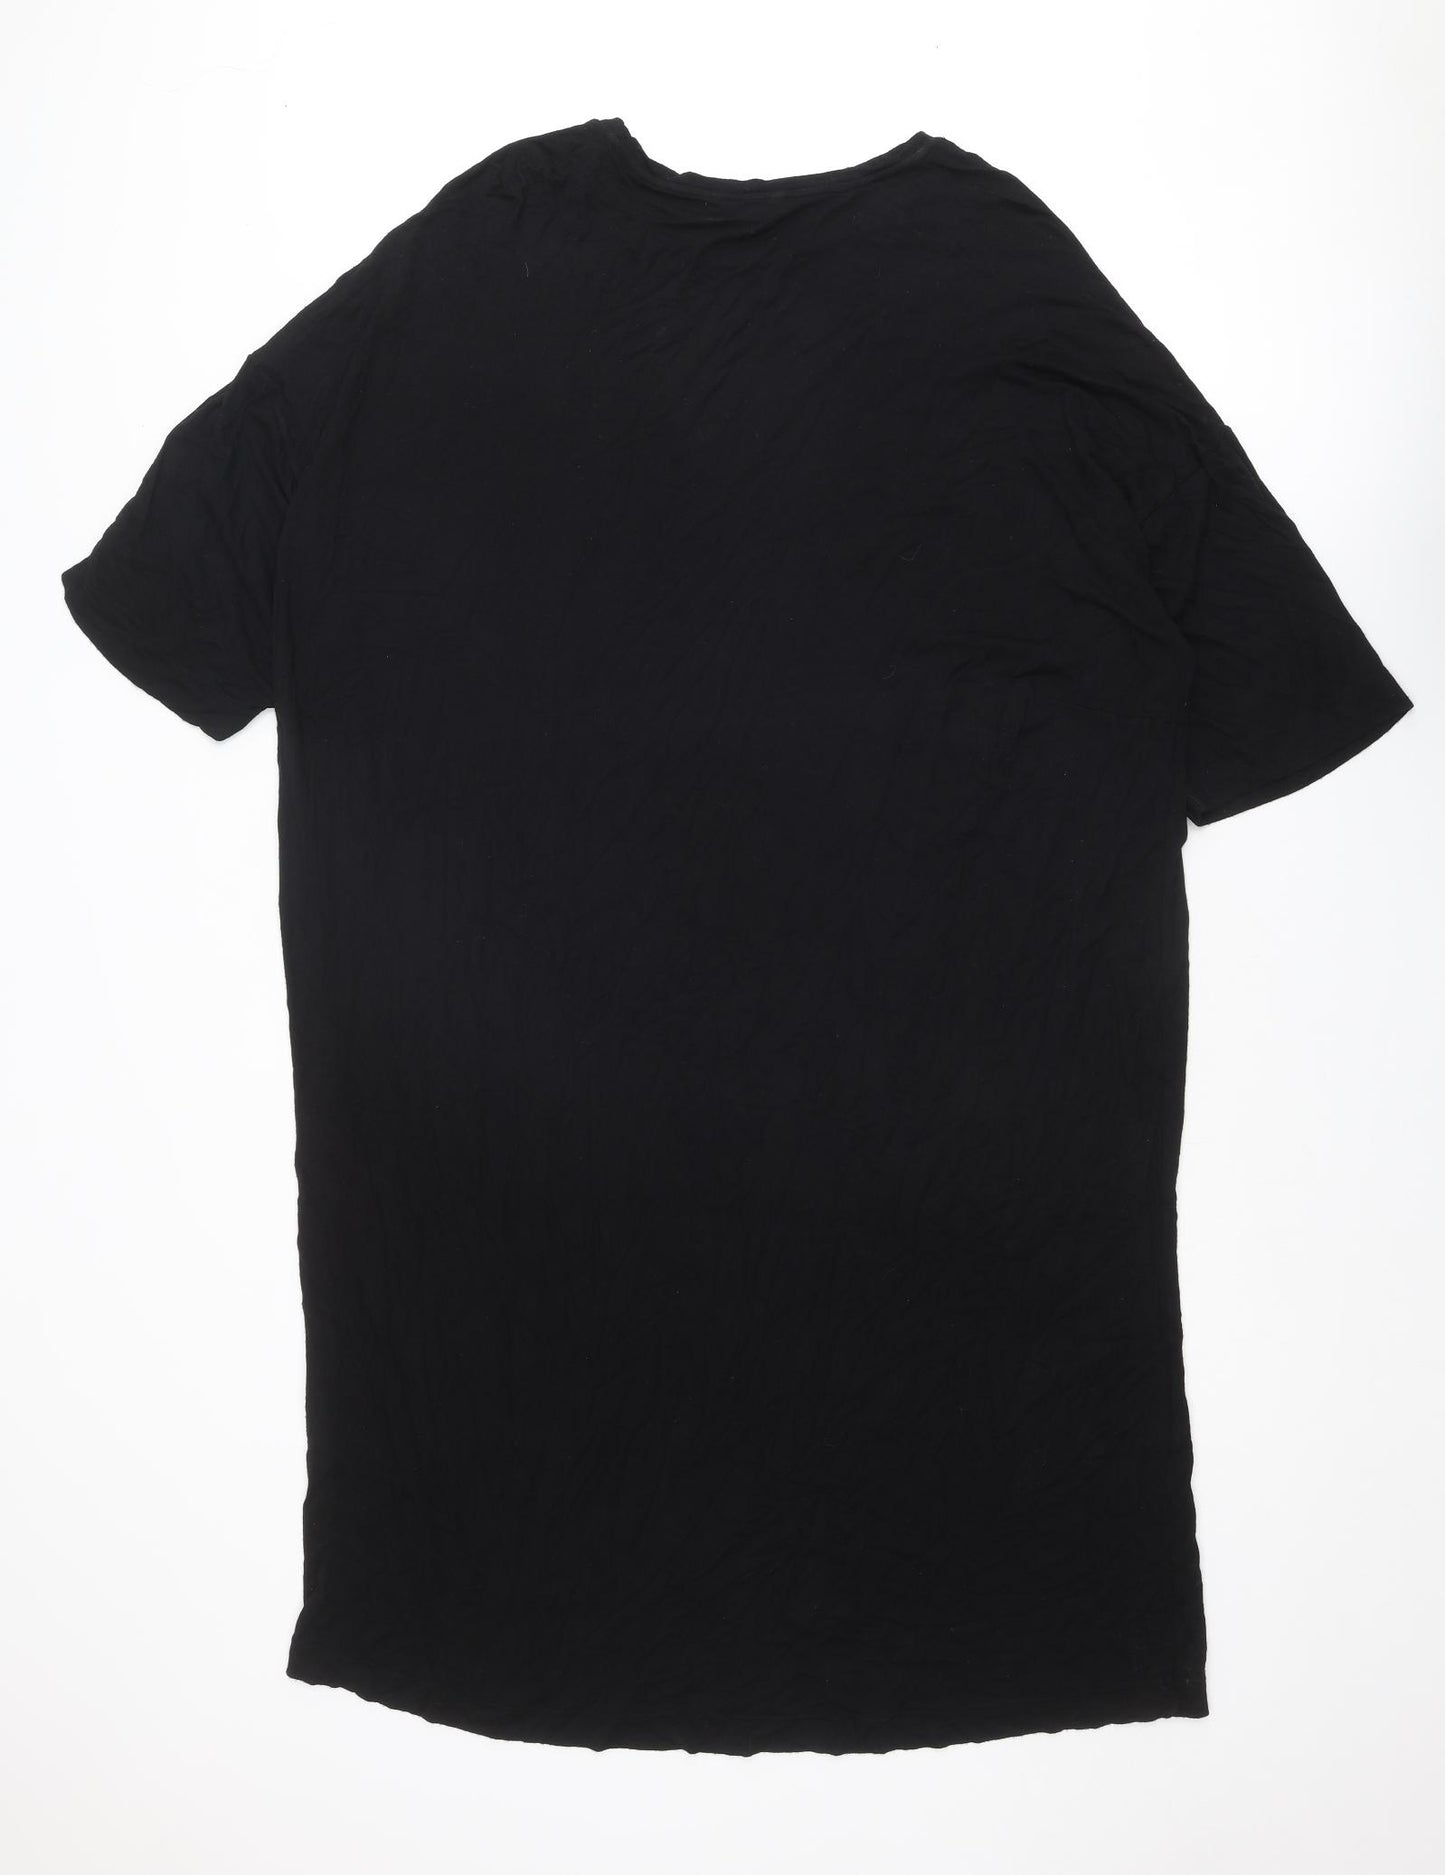 Monki Womens Black Viscose T-Shirt Dress Size L Crew Neck Pullover